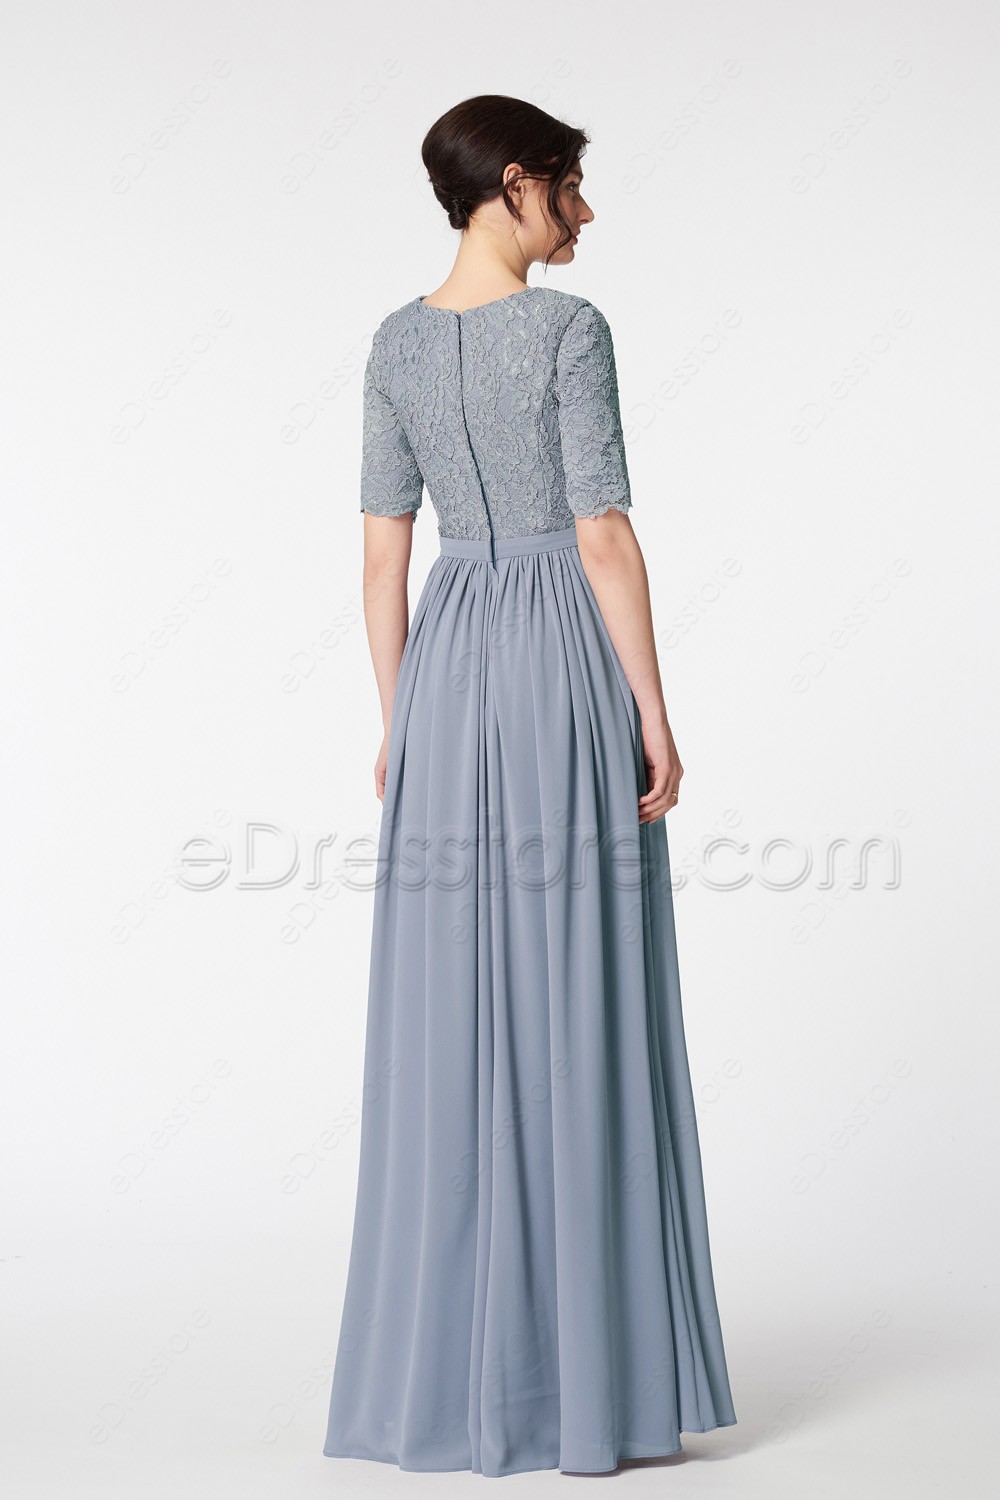 Dusty Blue Modest Dress Flash Sales, 50 ...